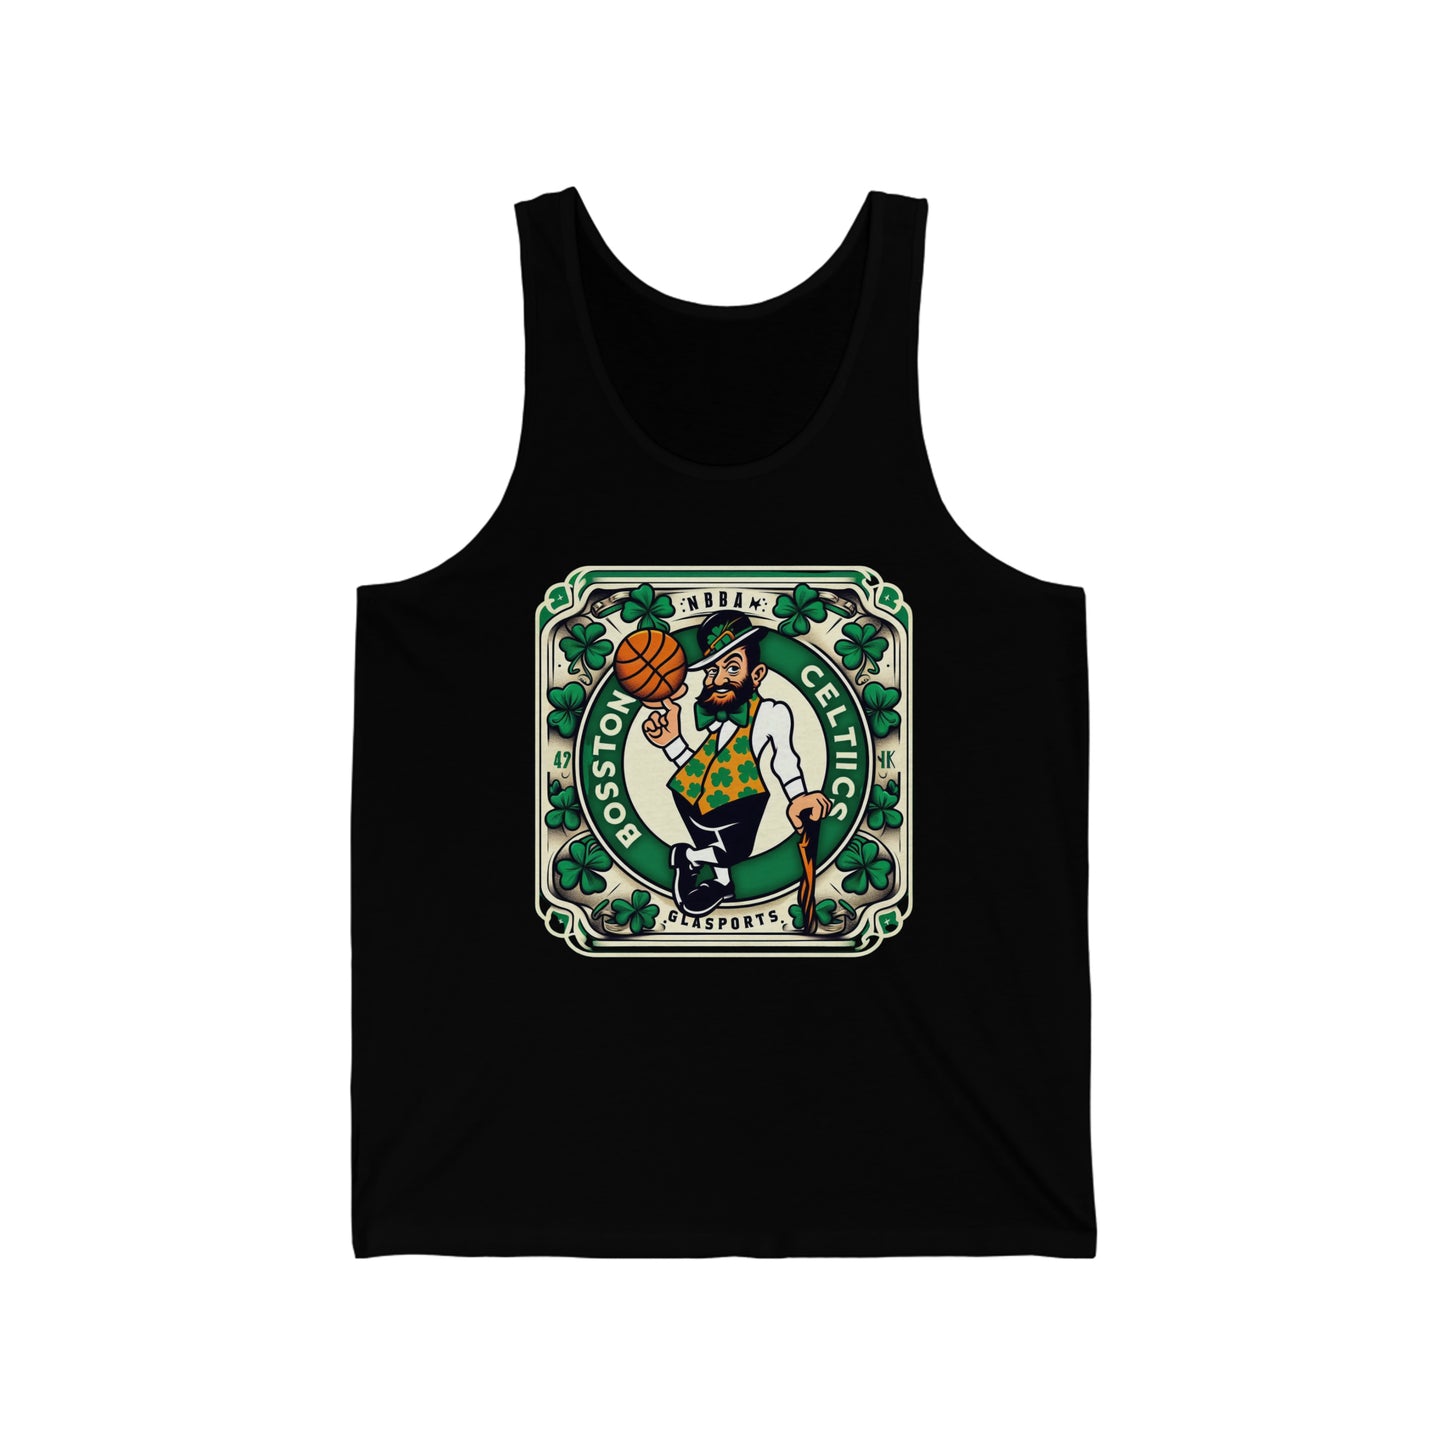 Cool and comfortable unisex Jersey Tank top (Boston Celtics, NBA basketball team)